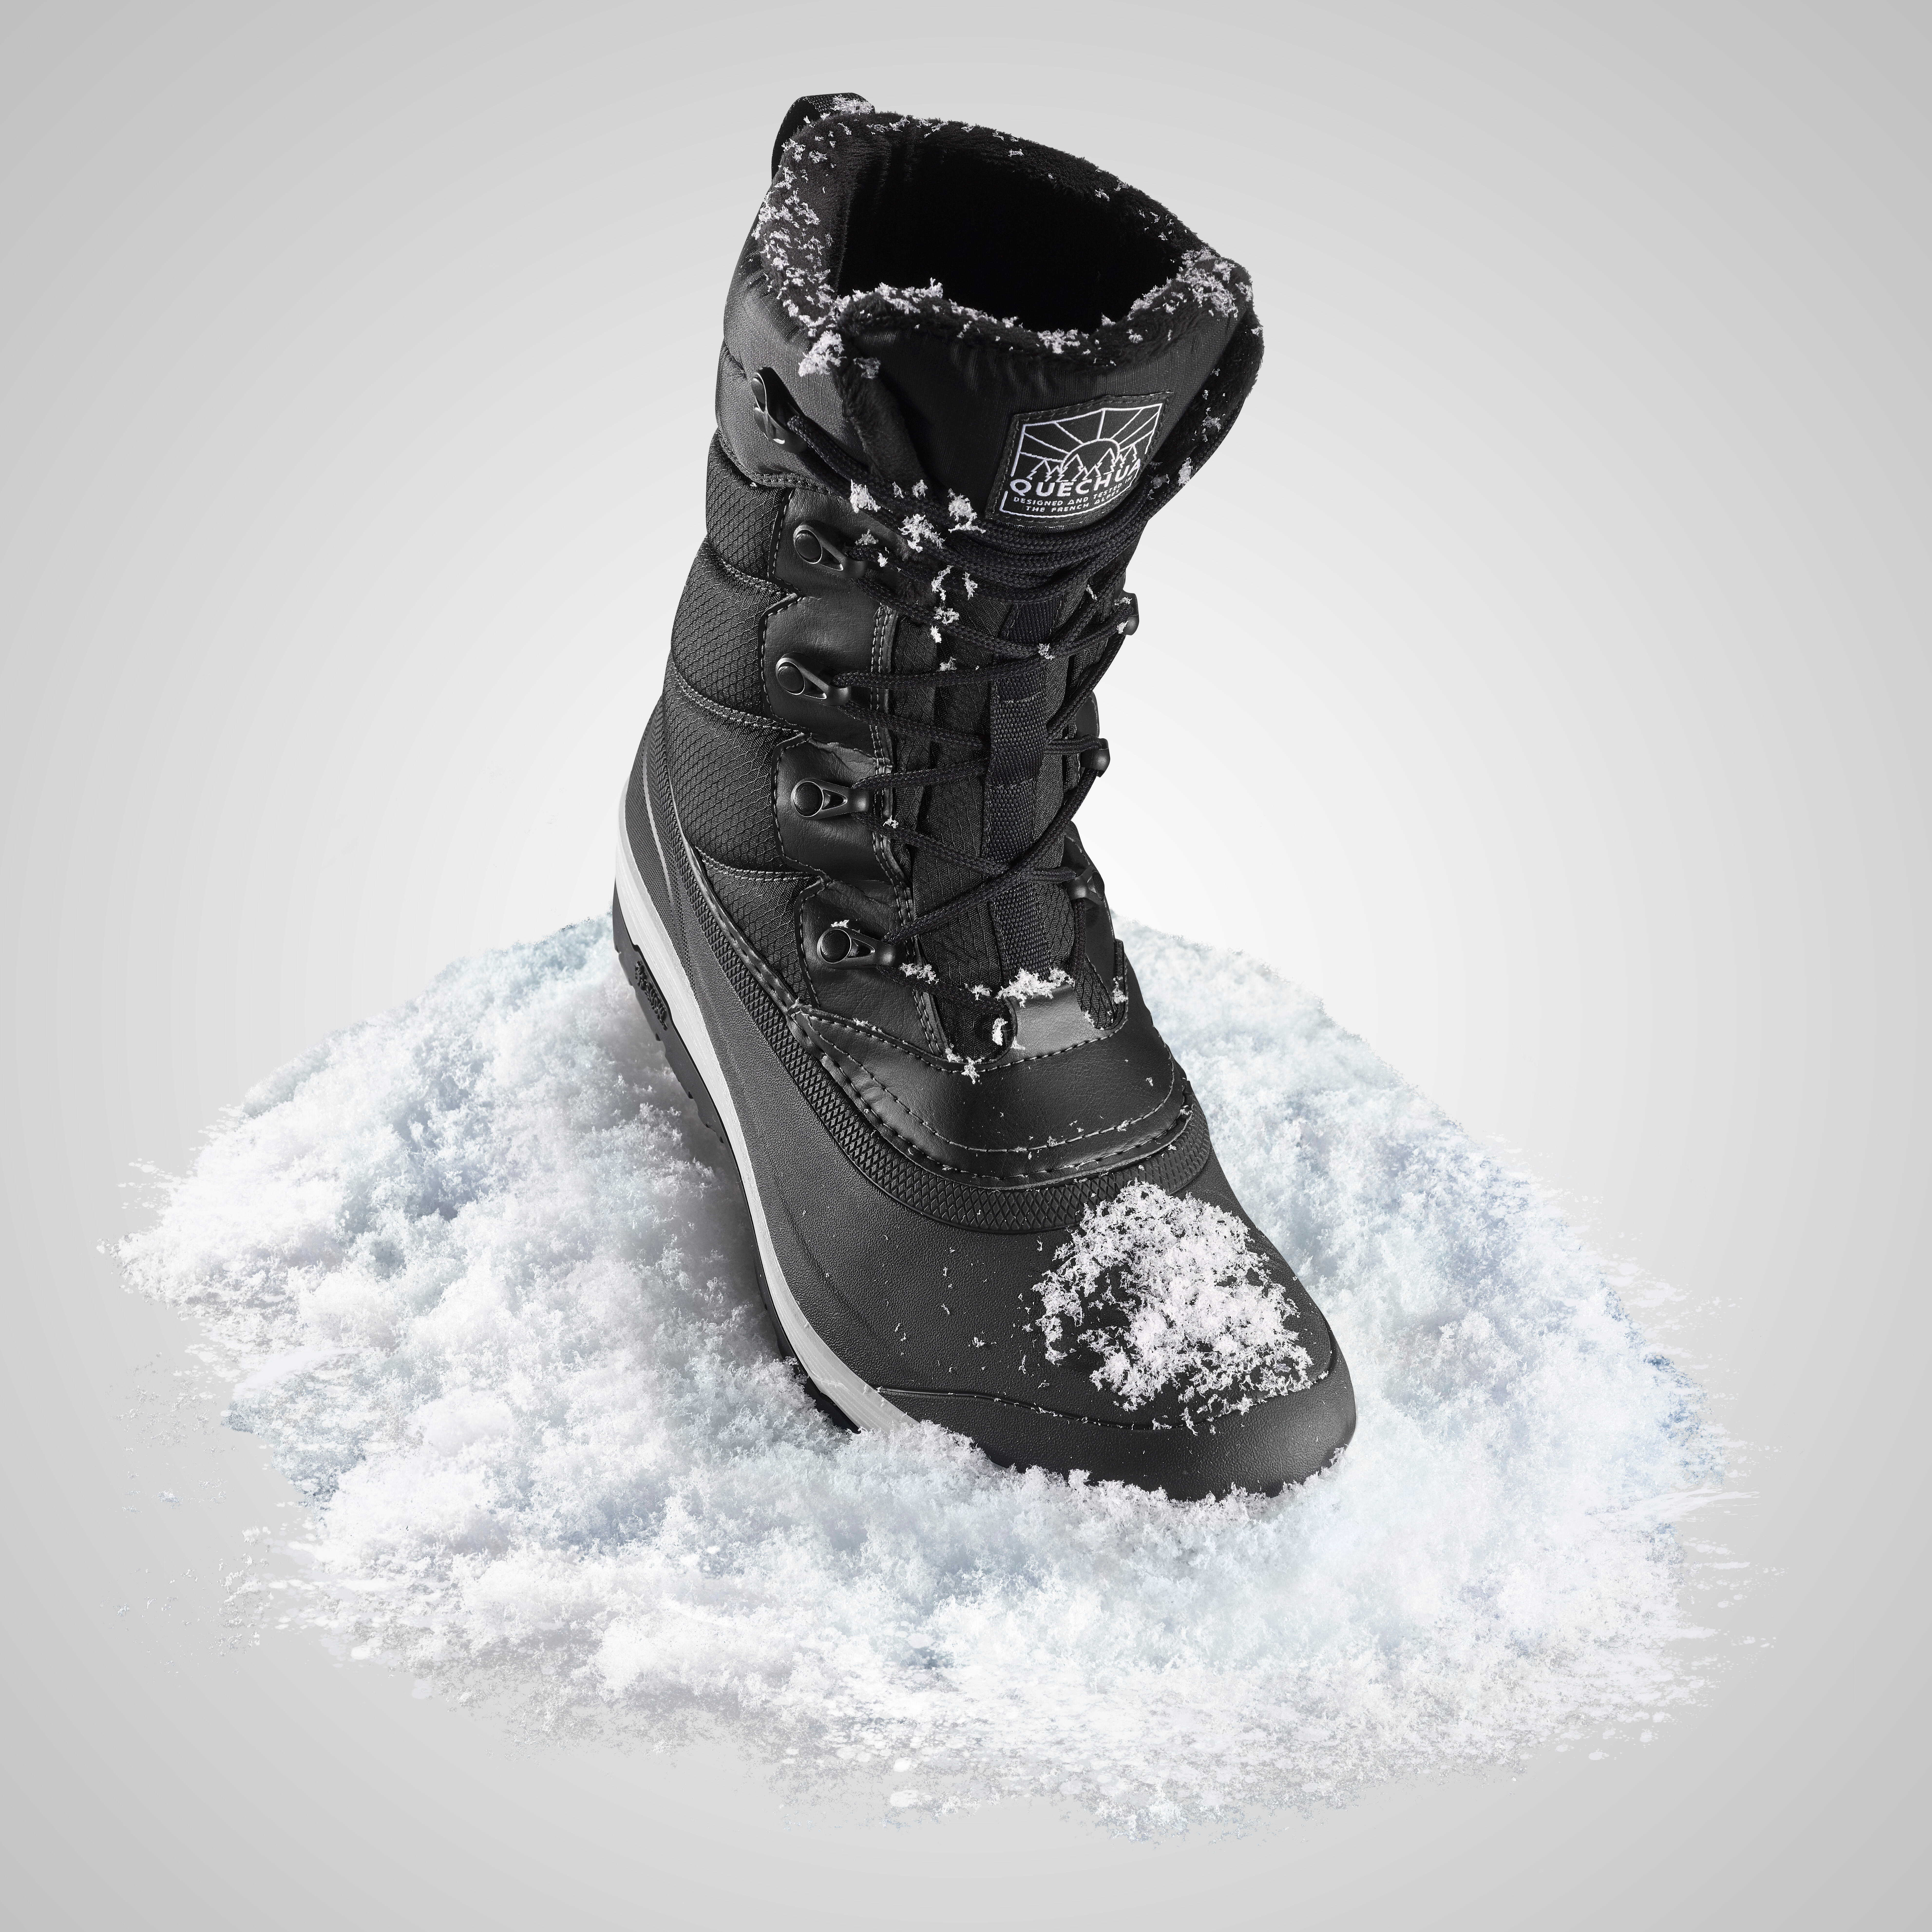 Men's Waterproof Hiking Boots - SH 500 X-Warm - Black - Quechua - Decathlon